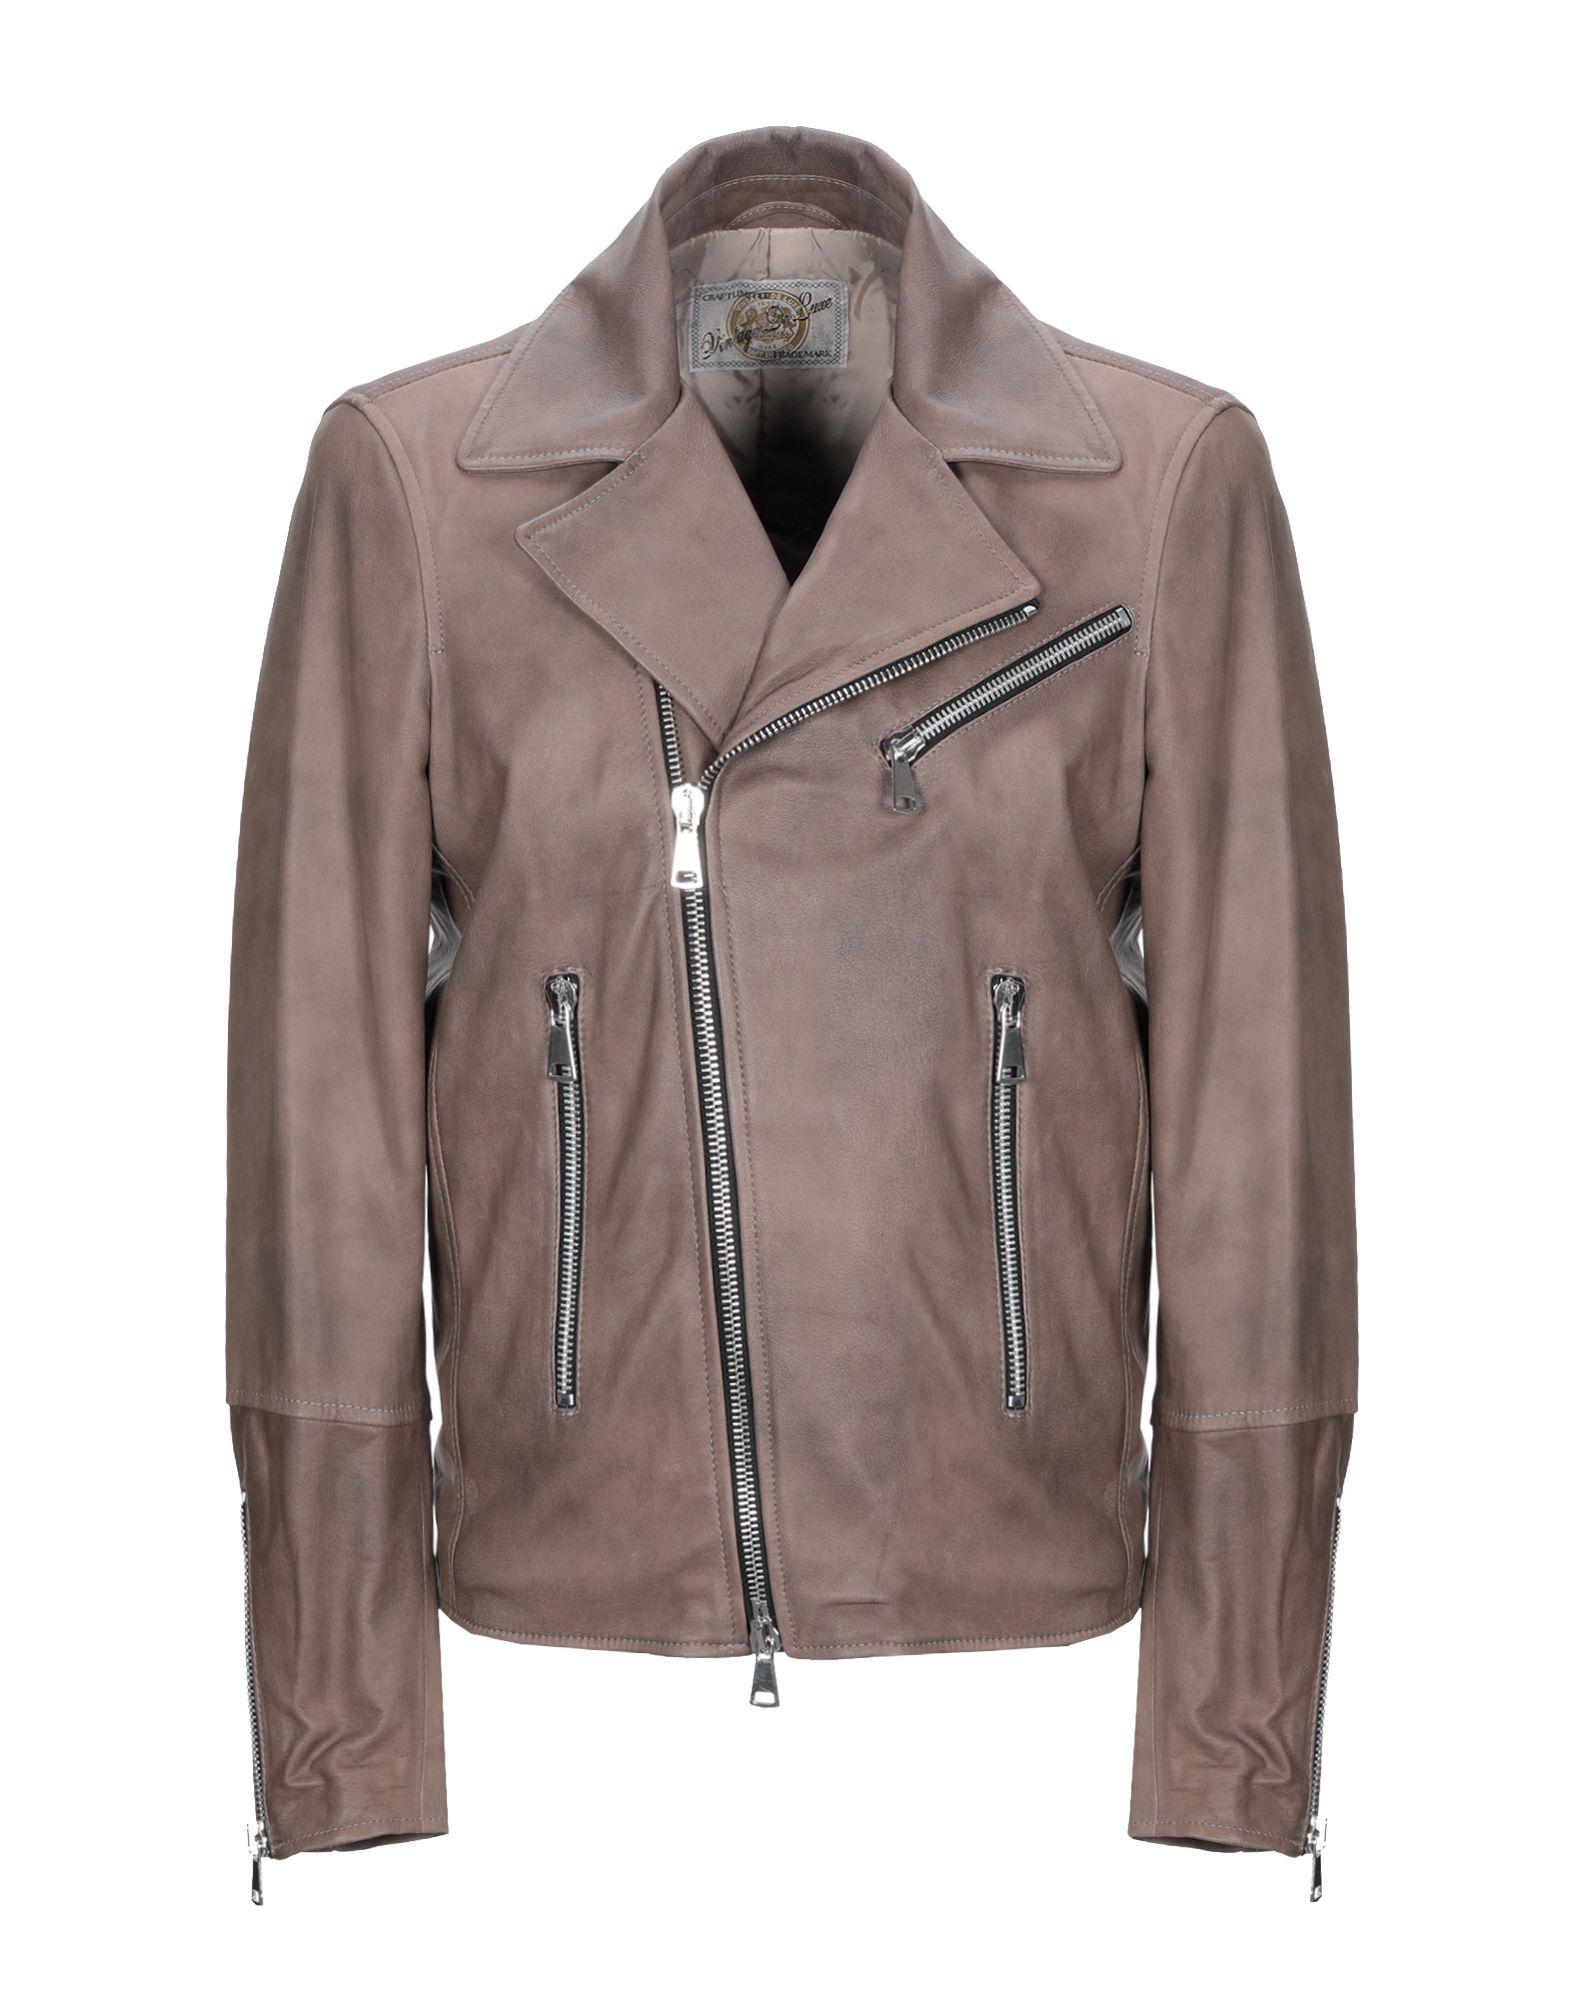 Vintage De Luxe Leather Jacket in Khaki (Brown) for Men - Lyst